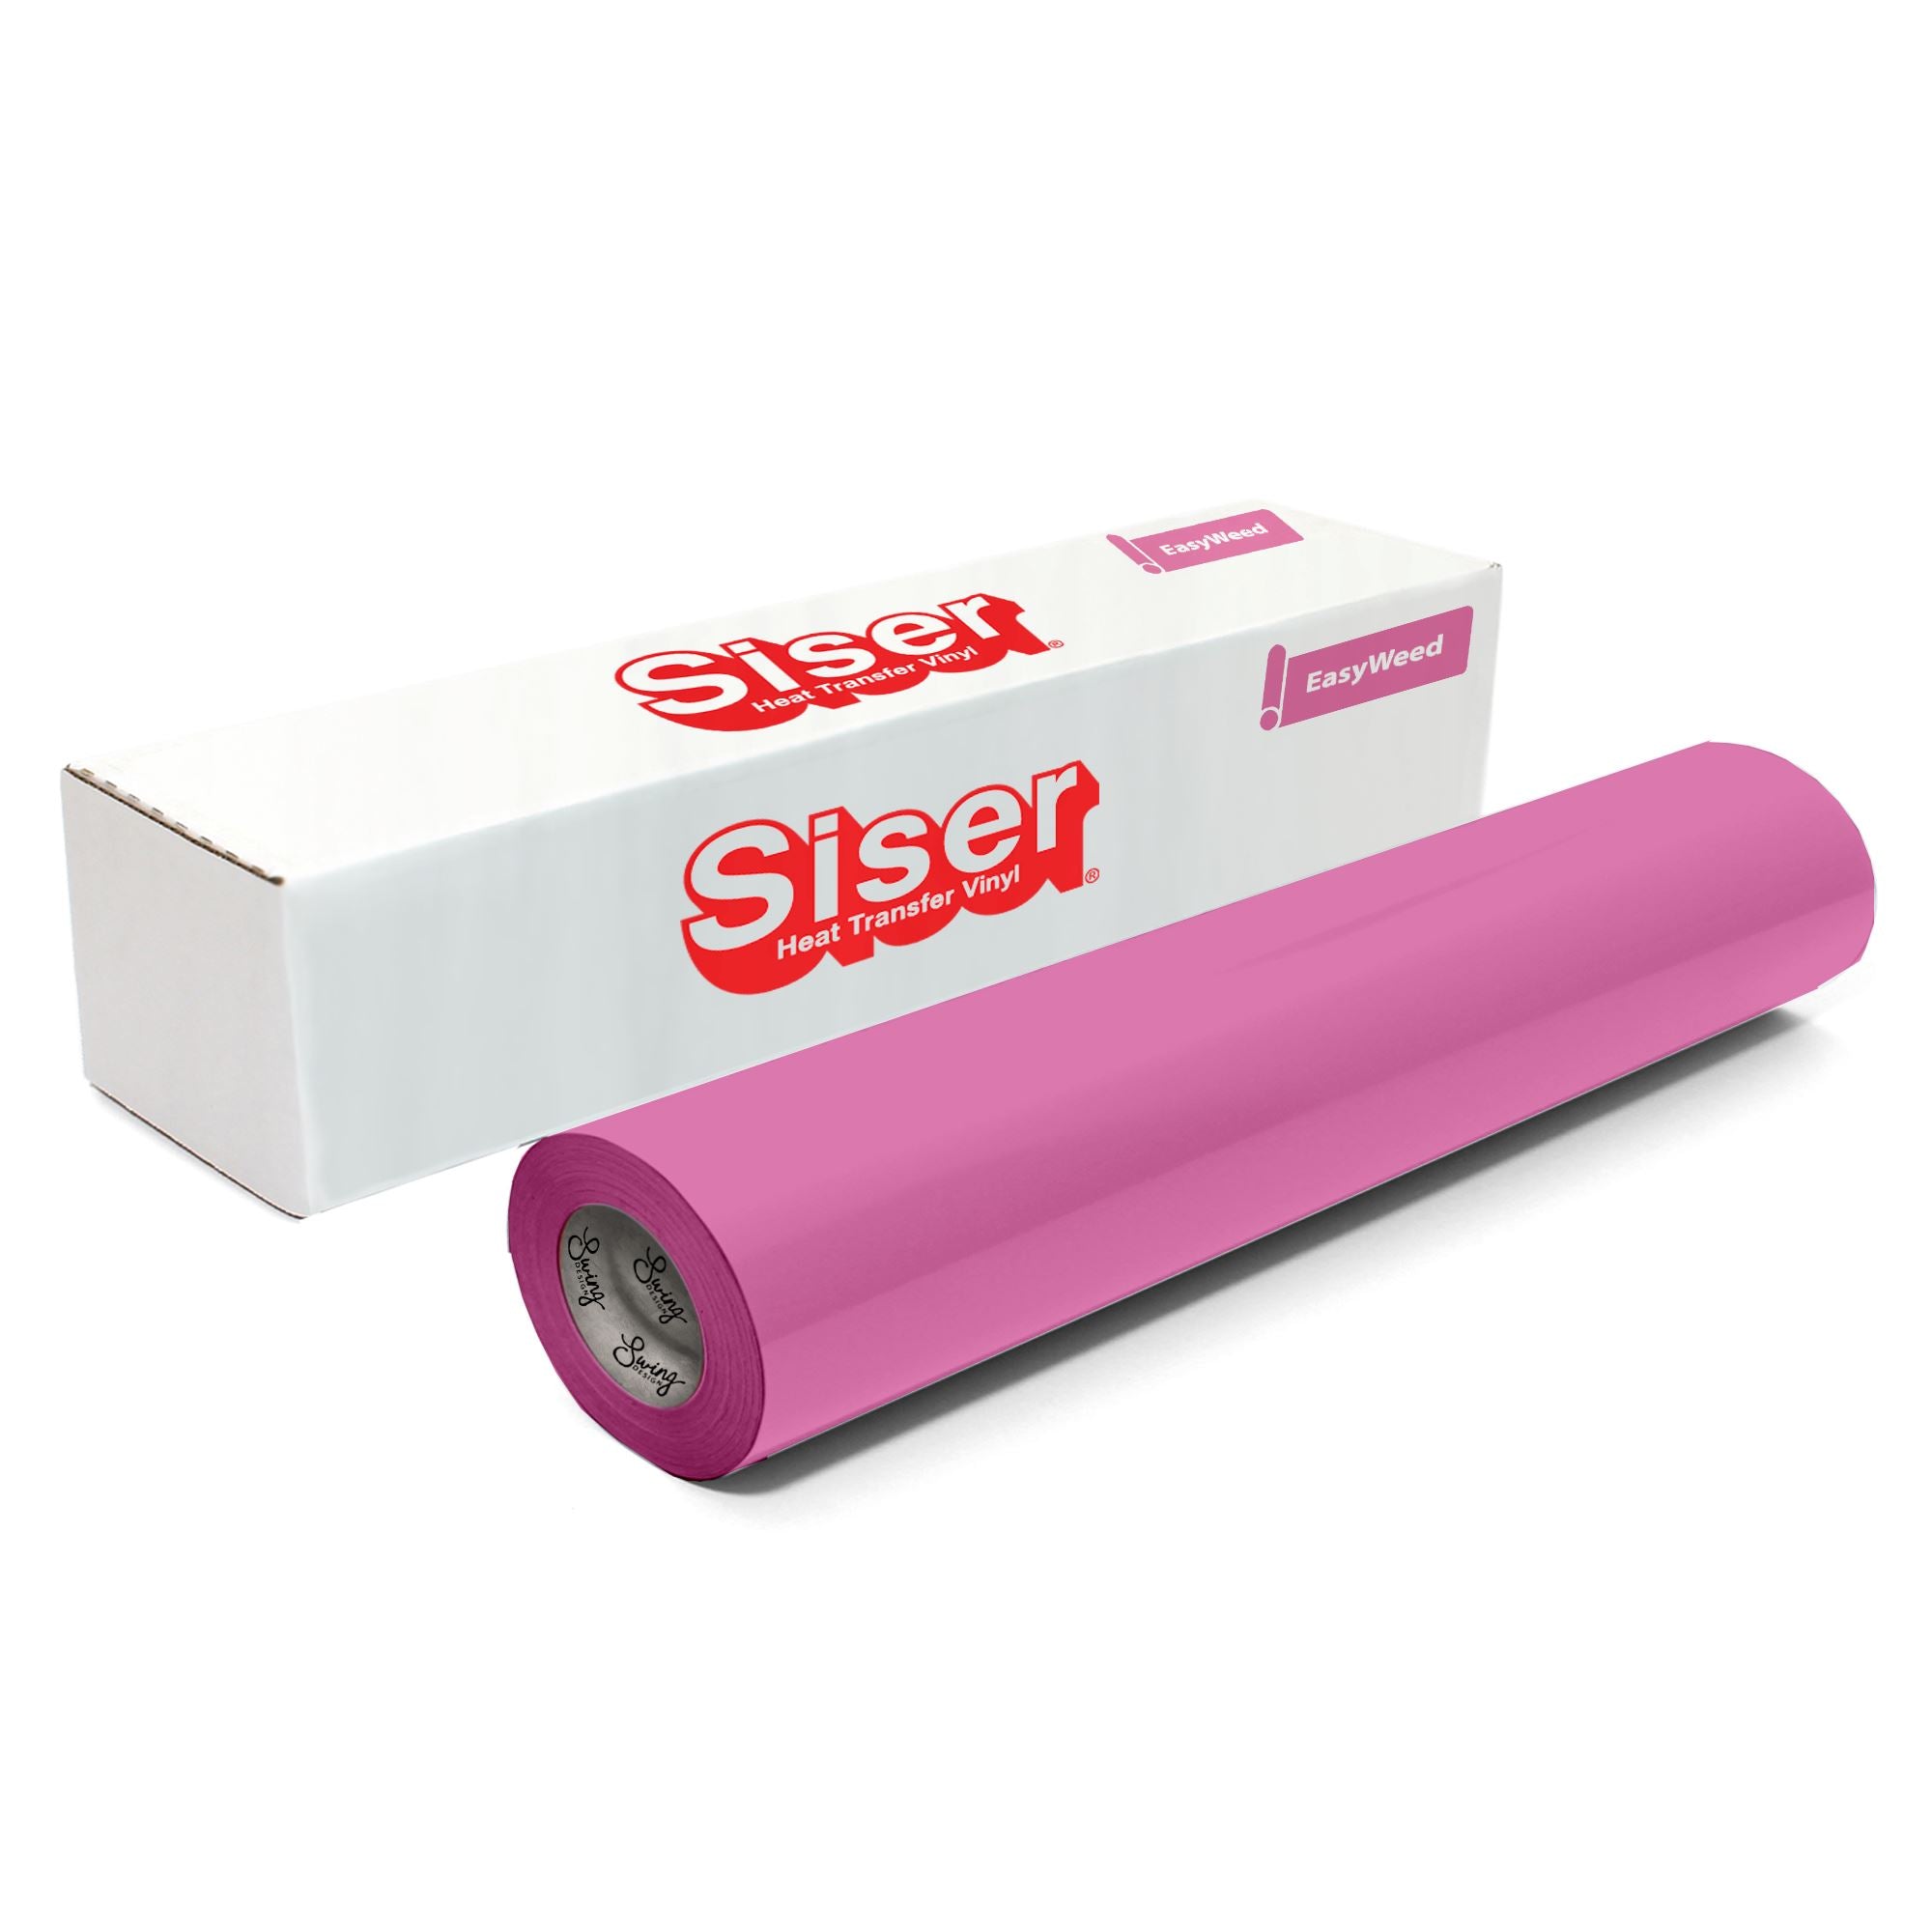 Siser Easyweed Electric Pink Heat Transfer Vinyl - 15x5 Yard Roll